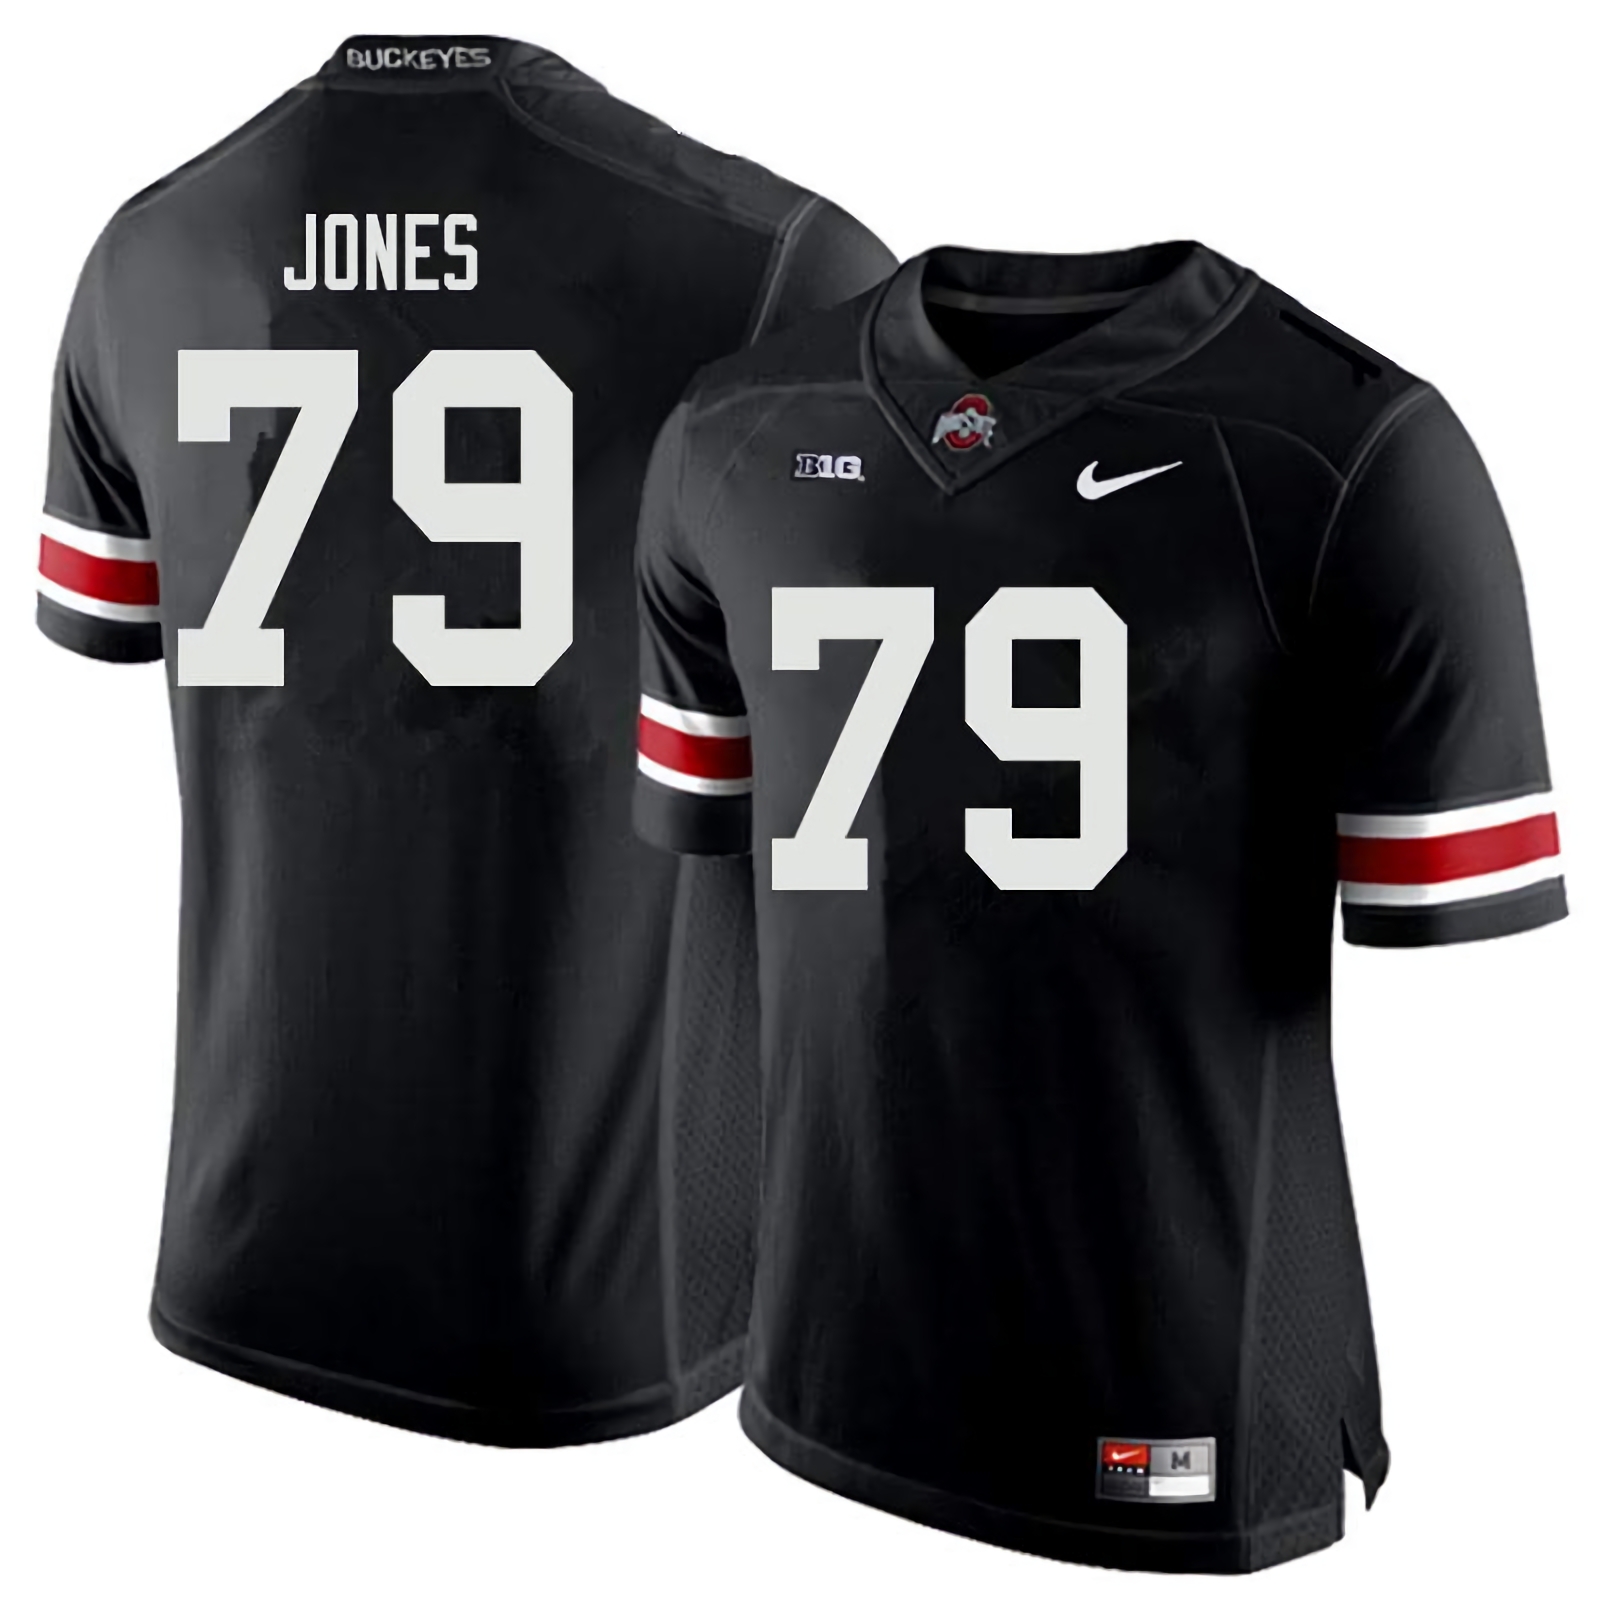 Dawand Jones Ohio State Buckeyes Men's NCAA #79 Nike Black College Stitched Football Jersey IUP4456IY